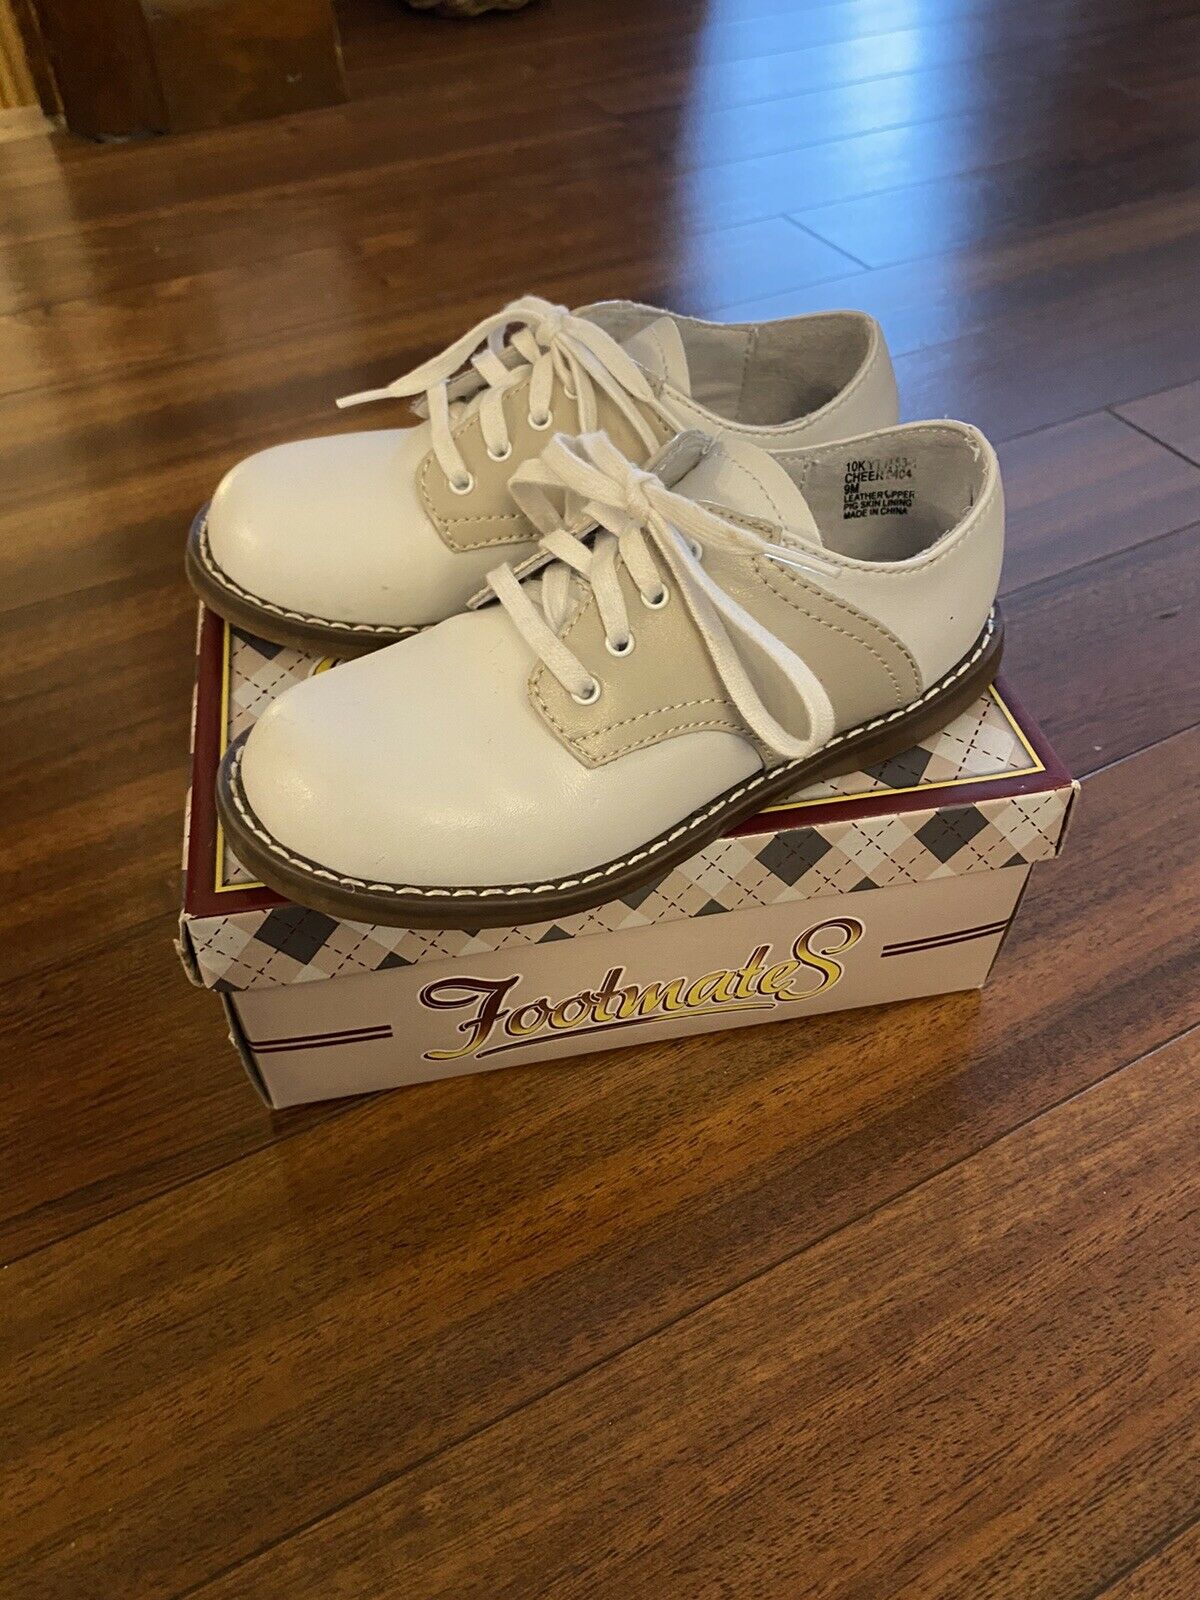 Footmates Saddle Shoes, White And Tan, Size 9